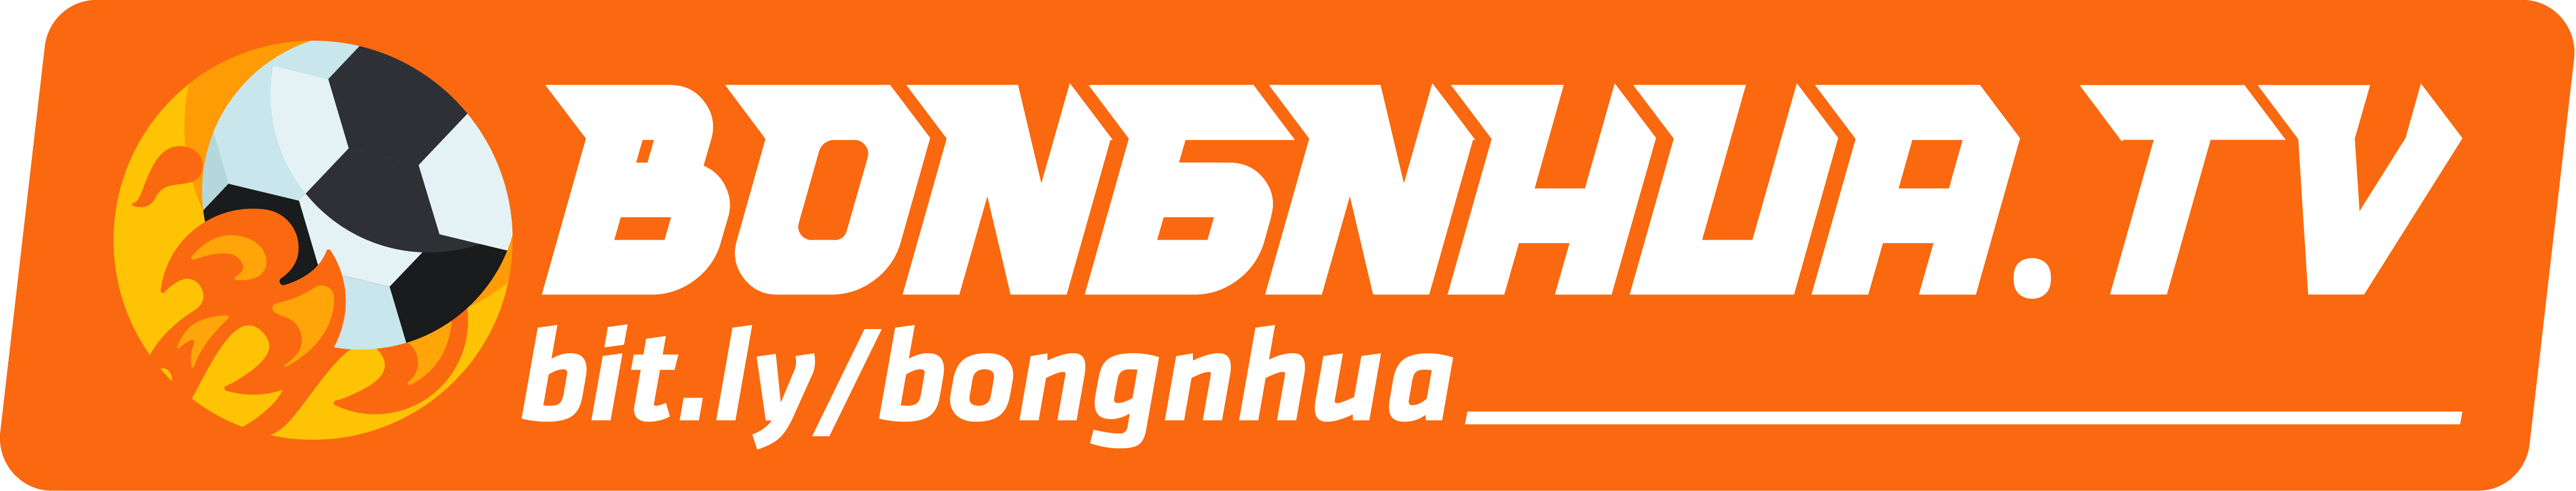 BongNhua.tv